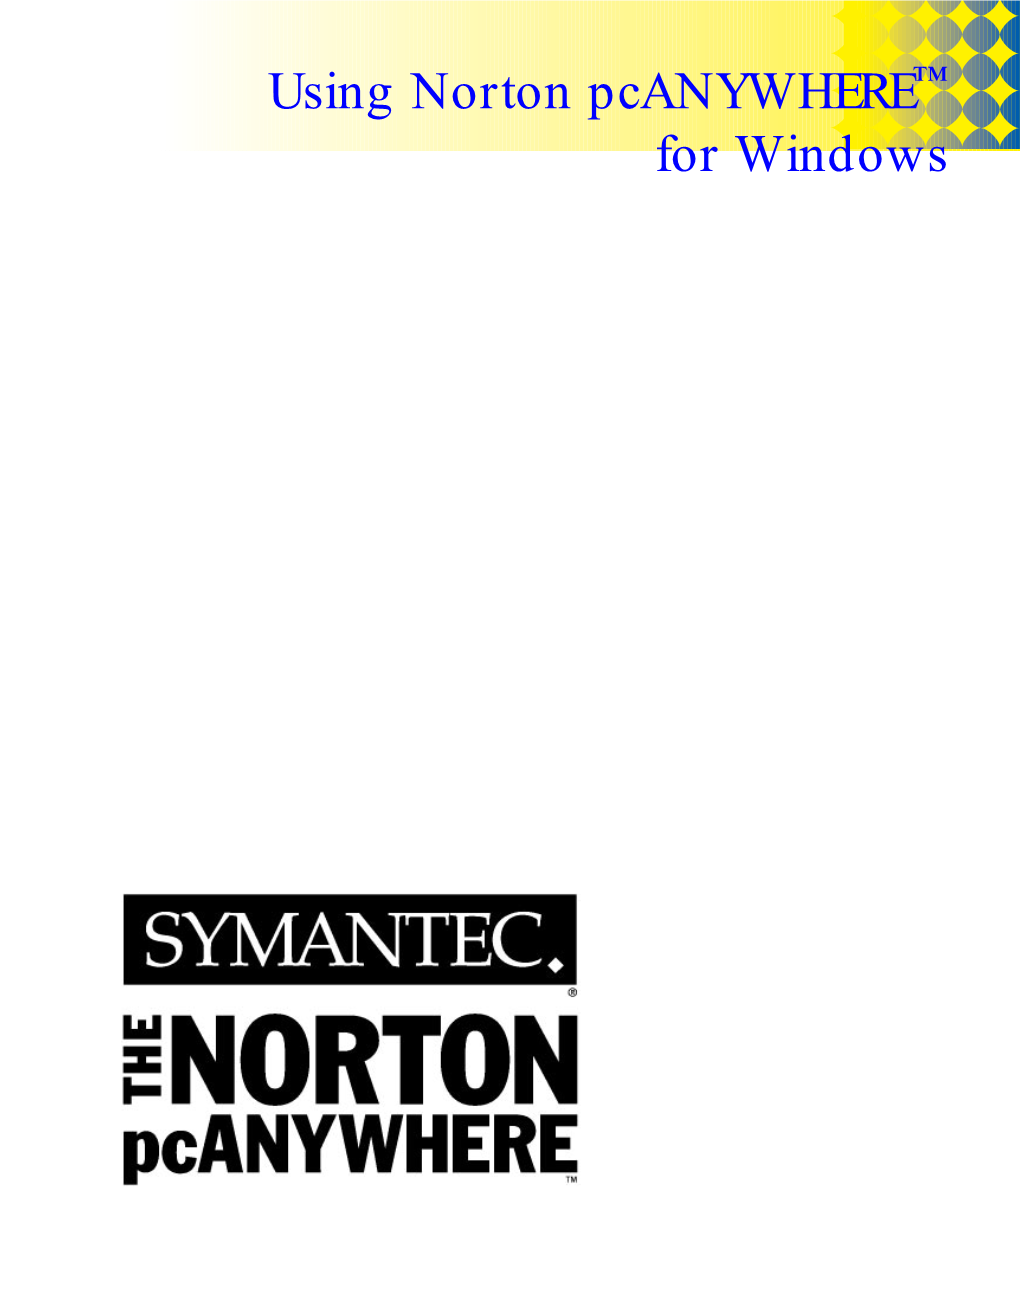 Norton Pcanywhere 2.0 for Windows